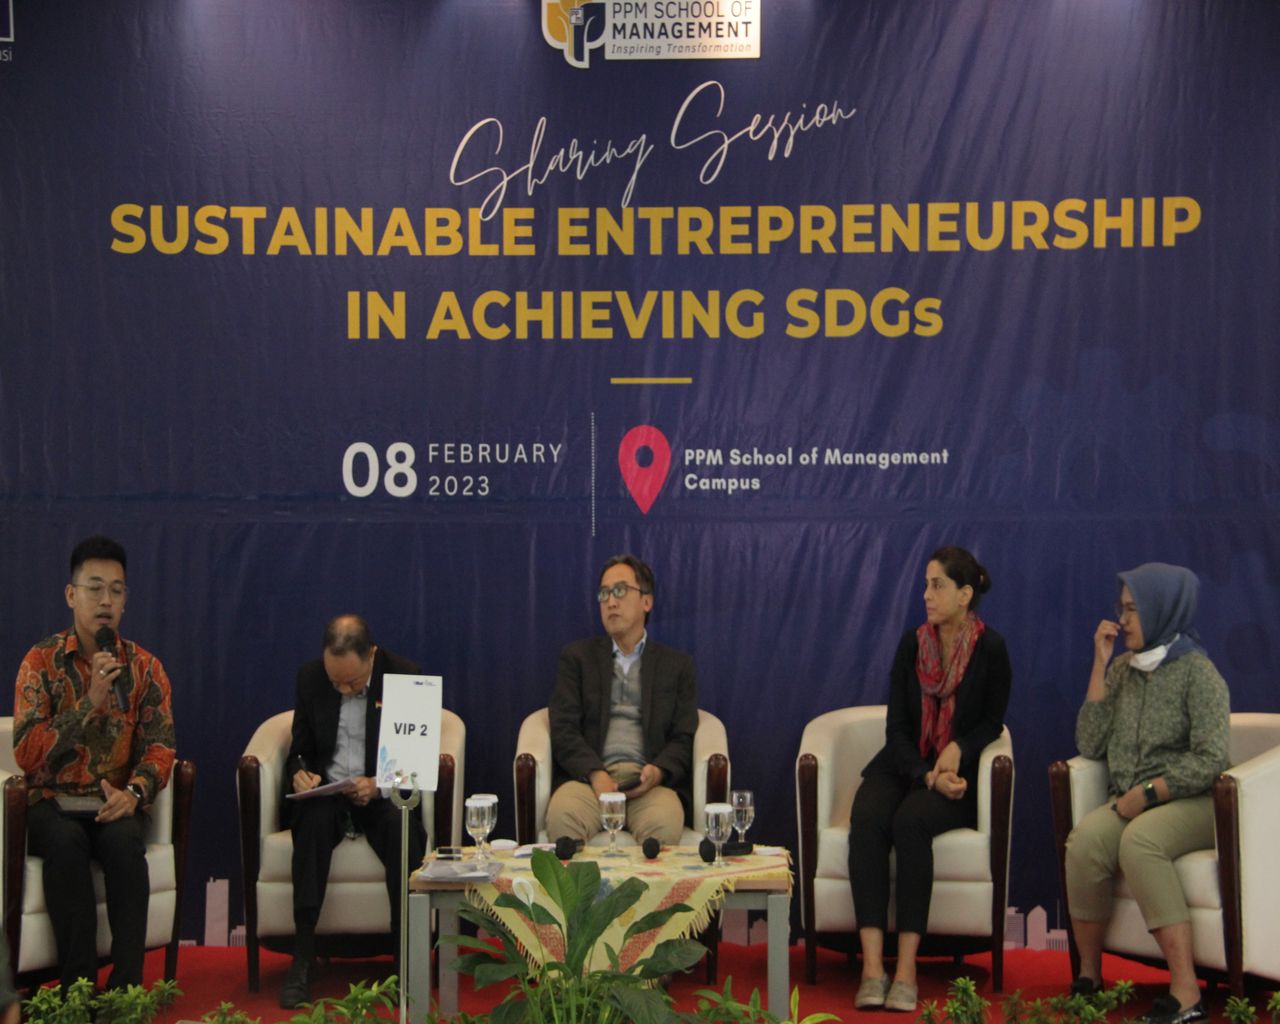 PPM Manajemen Ingatkan Pentingnya “Sustainable Entrepreneurship” untuk Perkuat SDGs